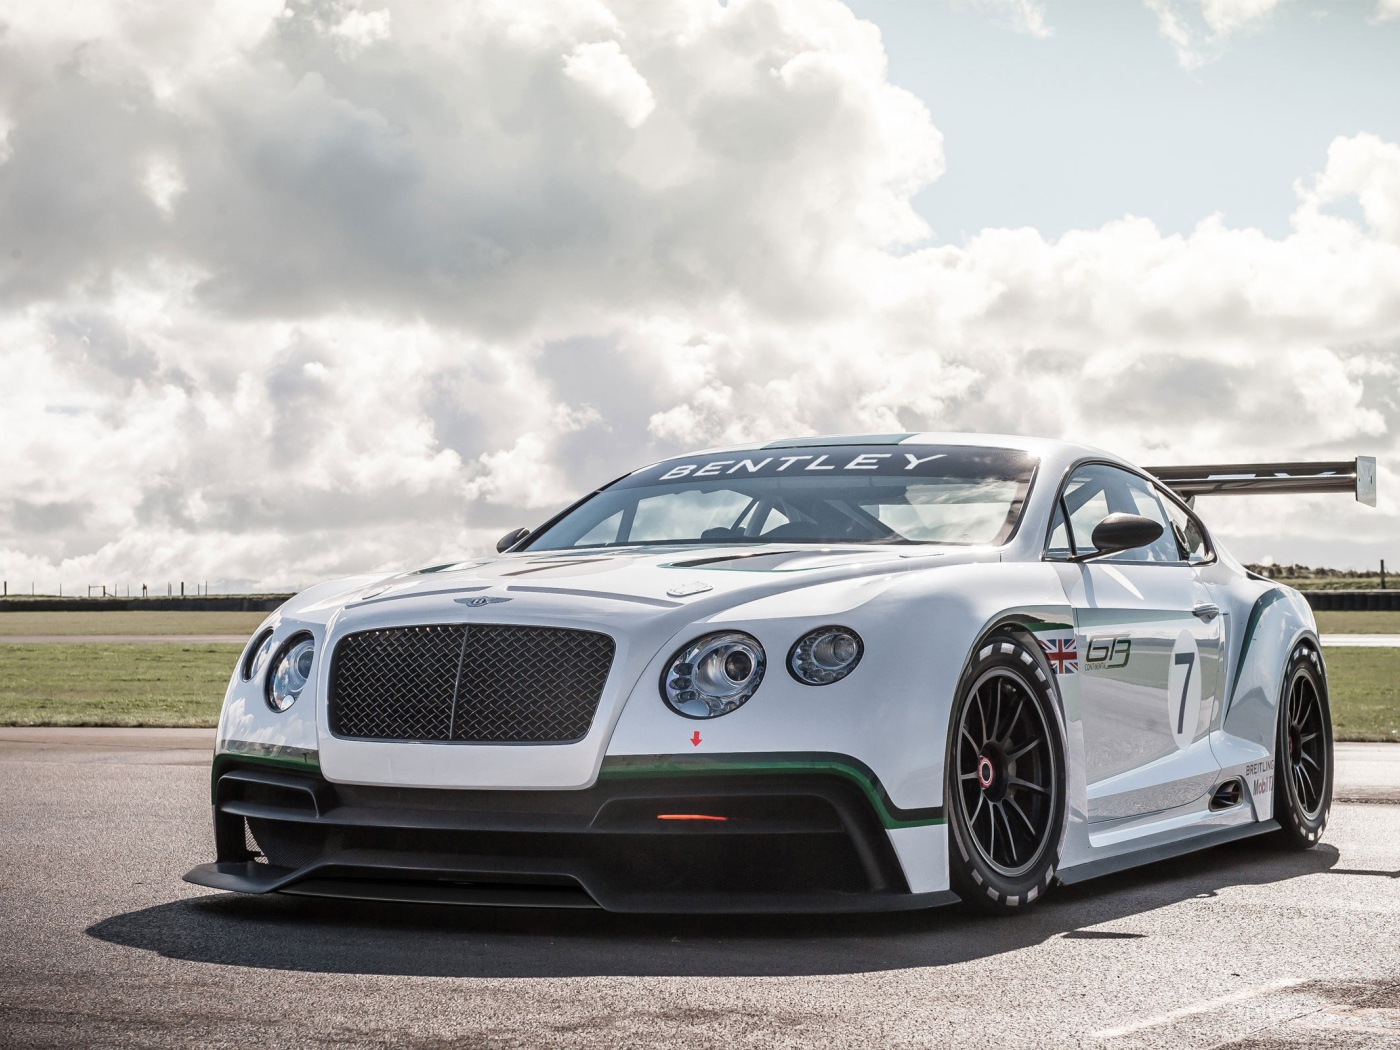 Bentley sports car